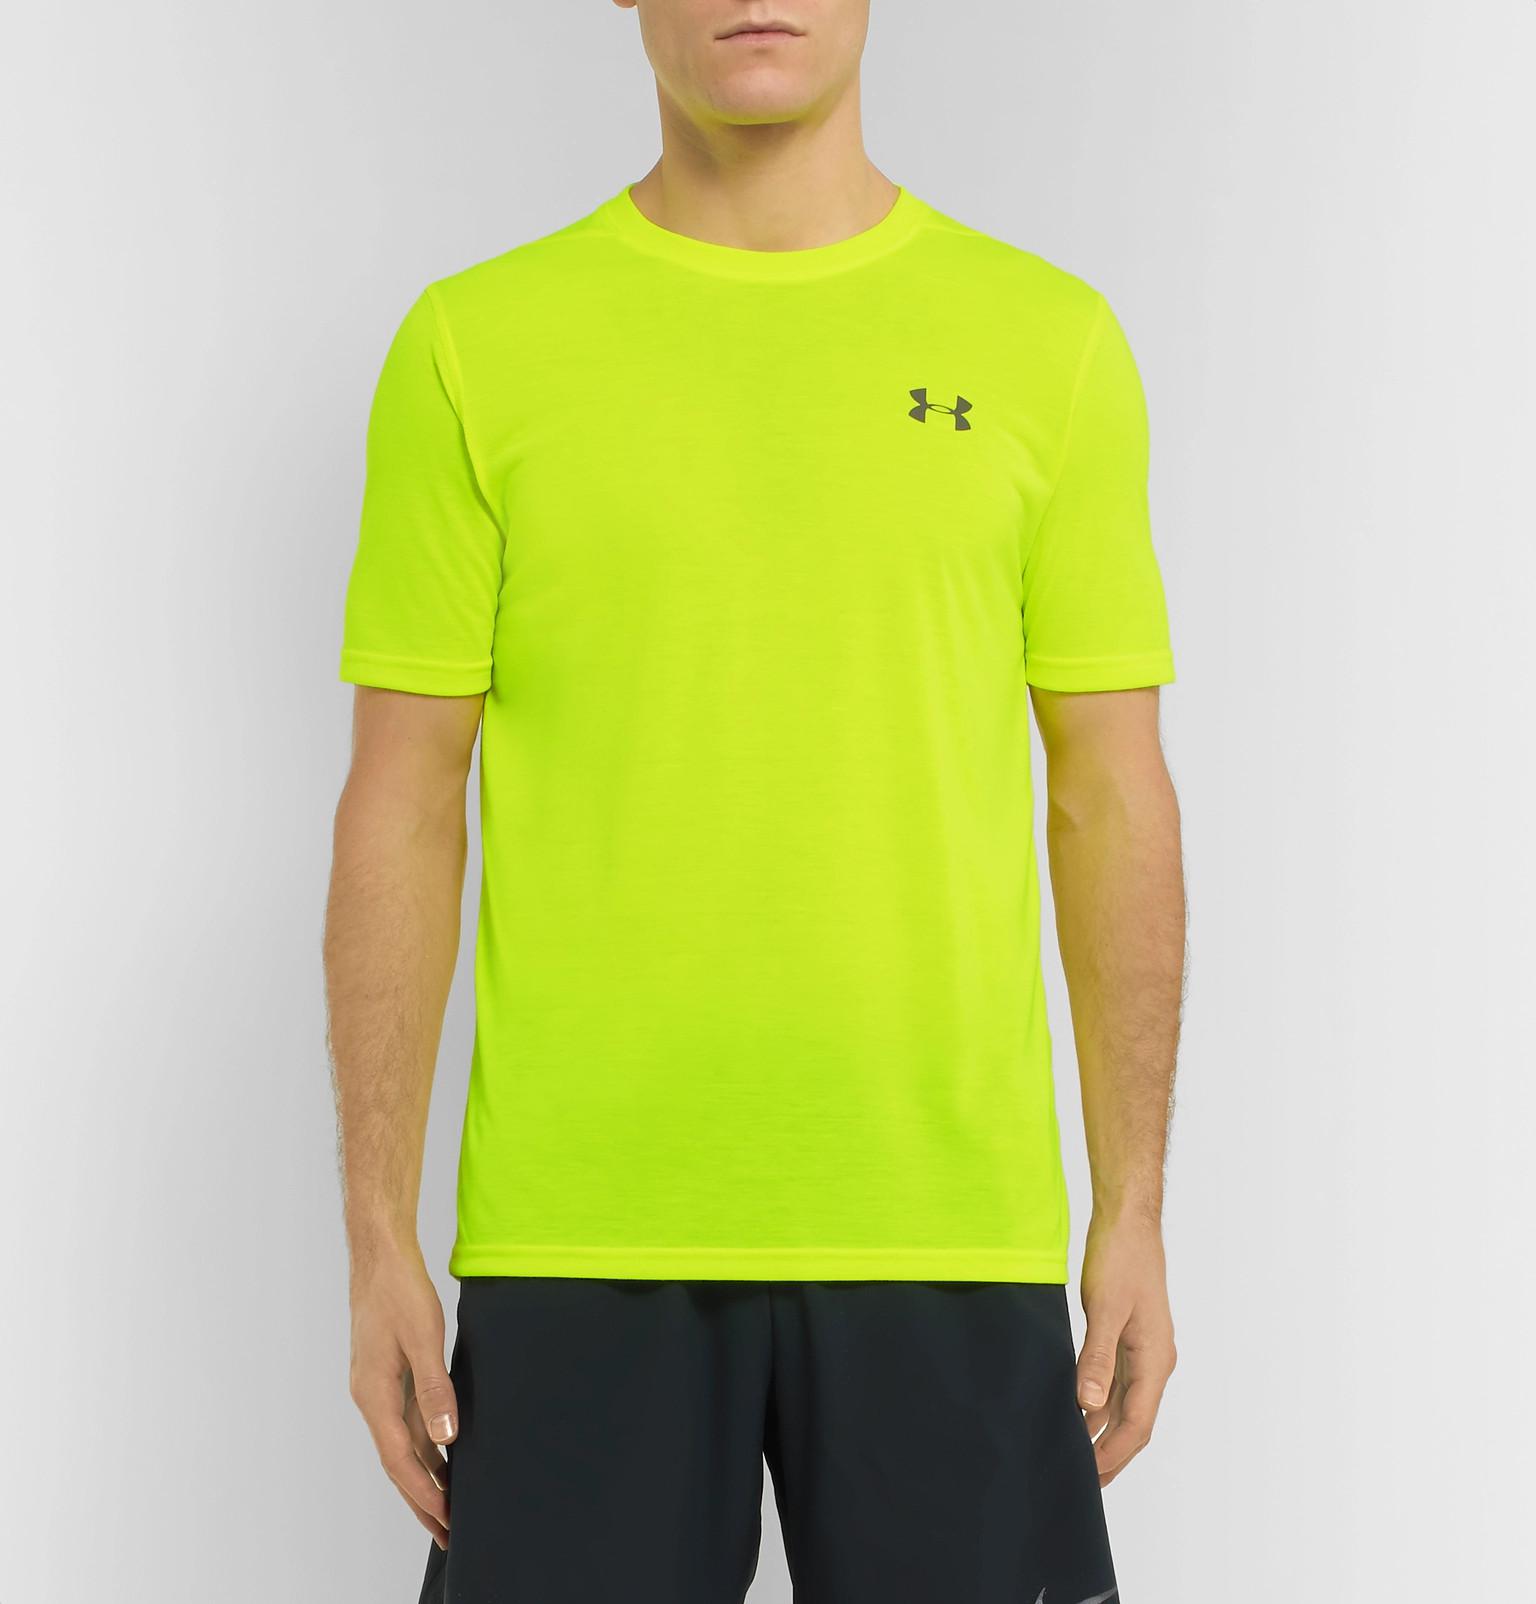 Under Armour Synthetic Threadborne Siro T-shirt in Yellow for Men - Lyst